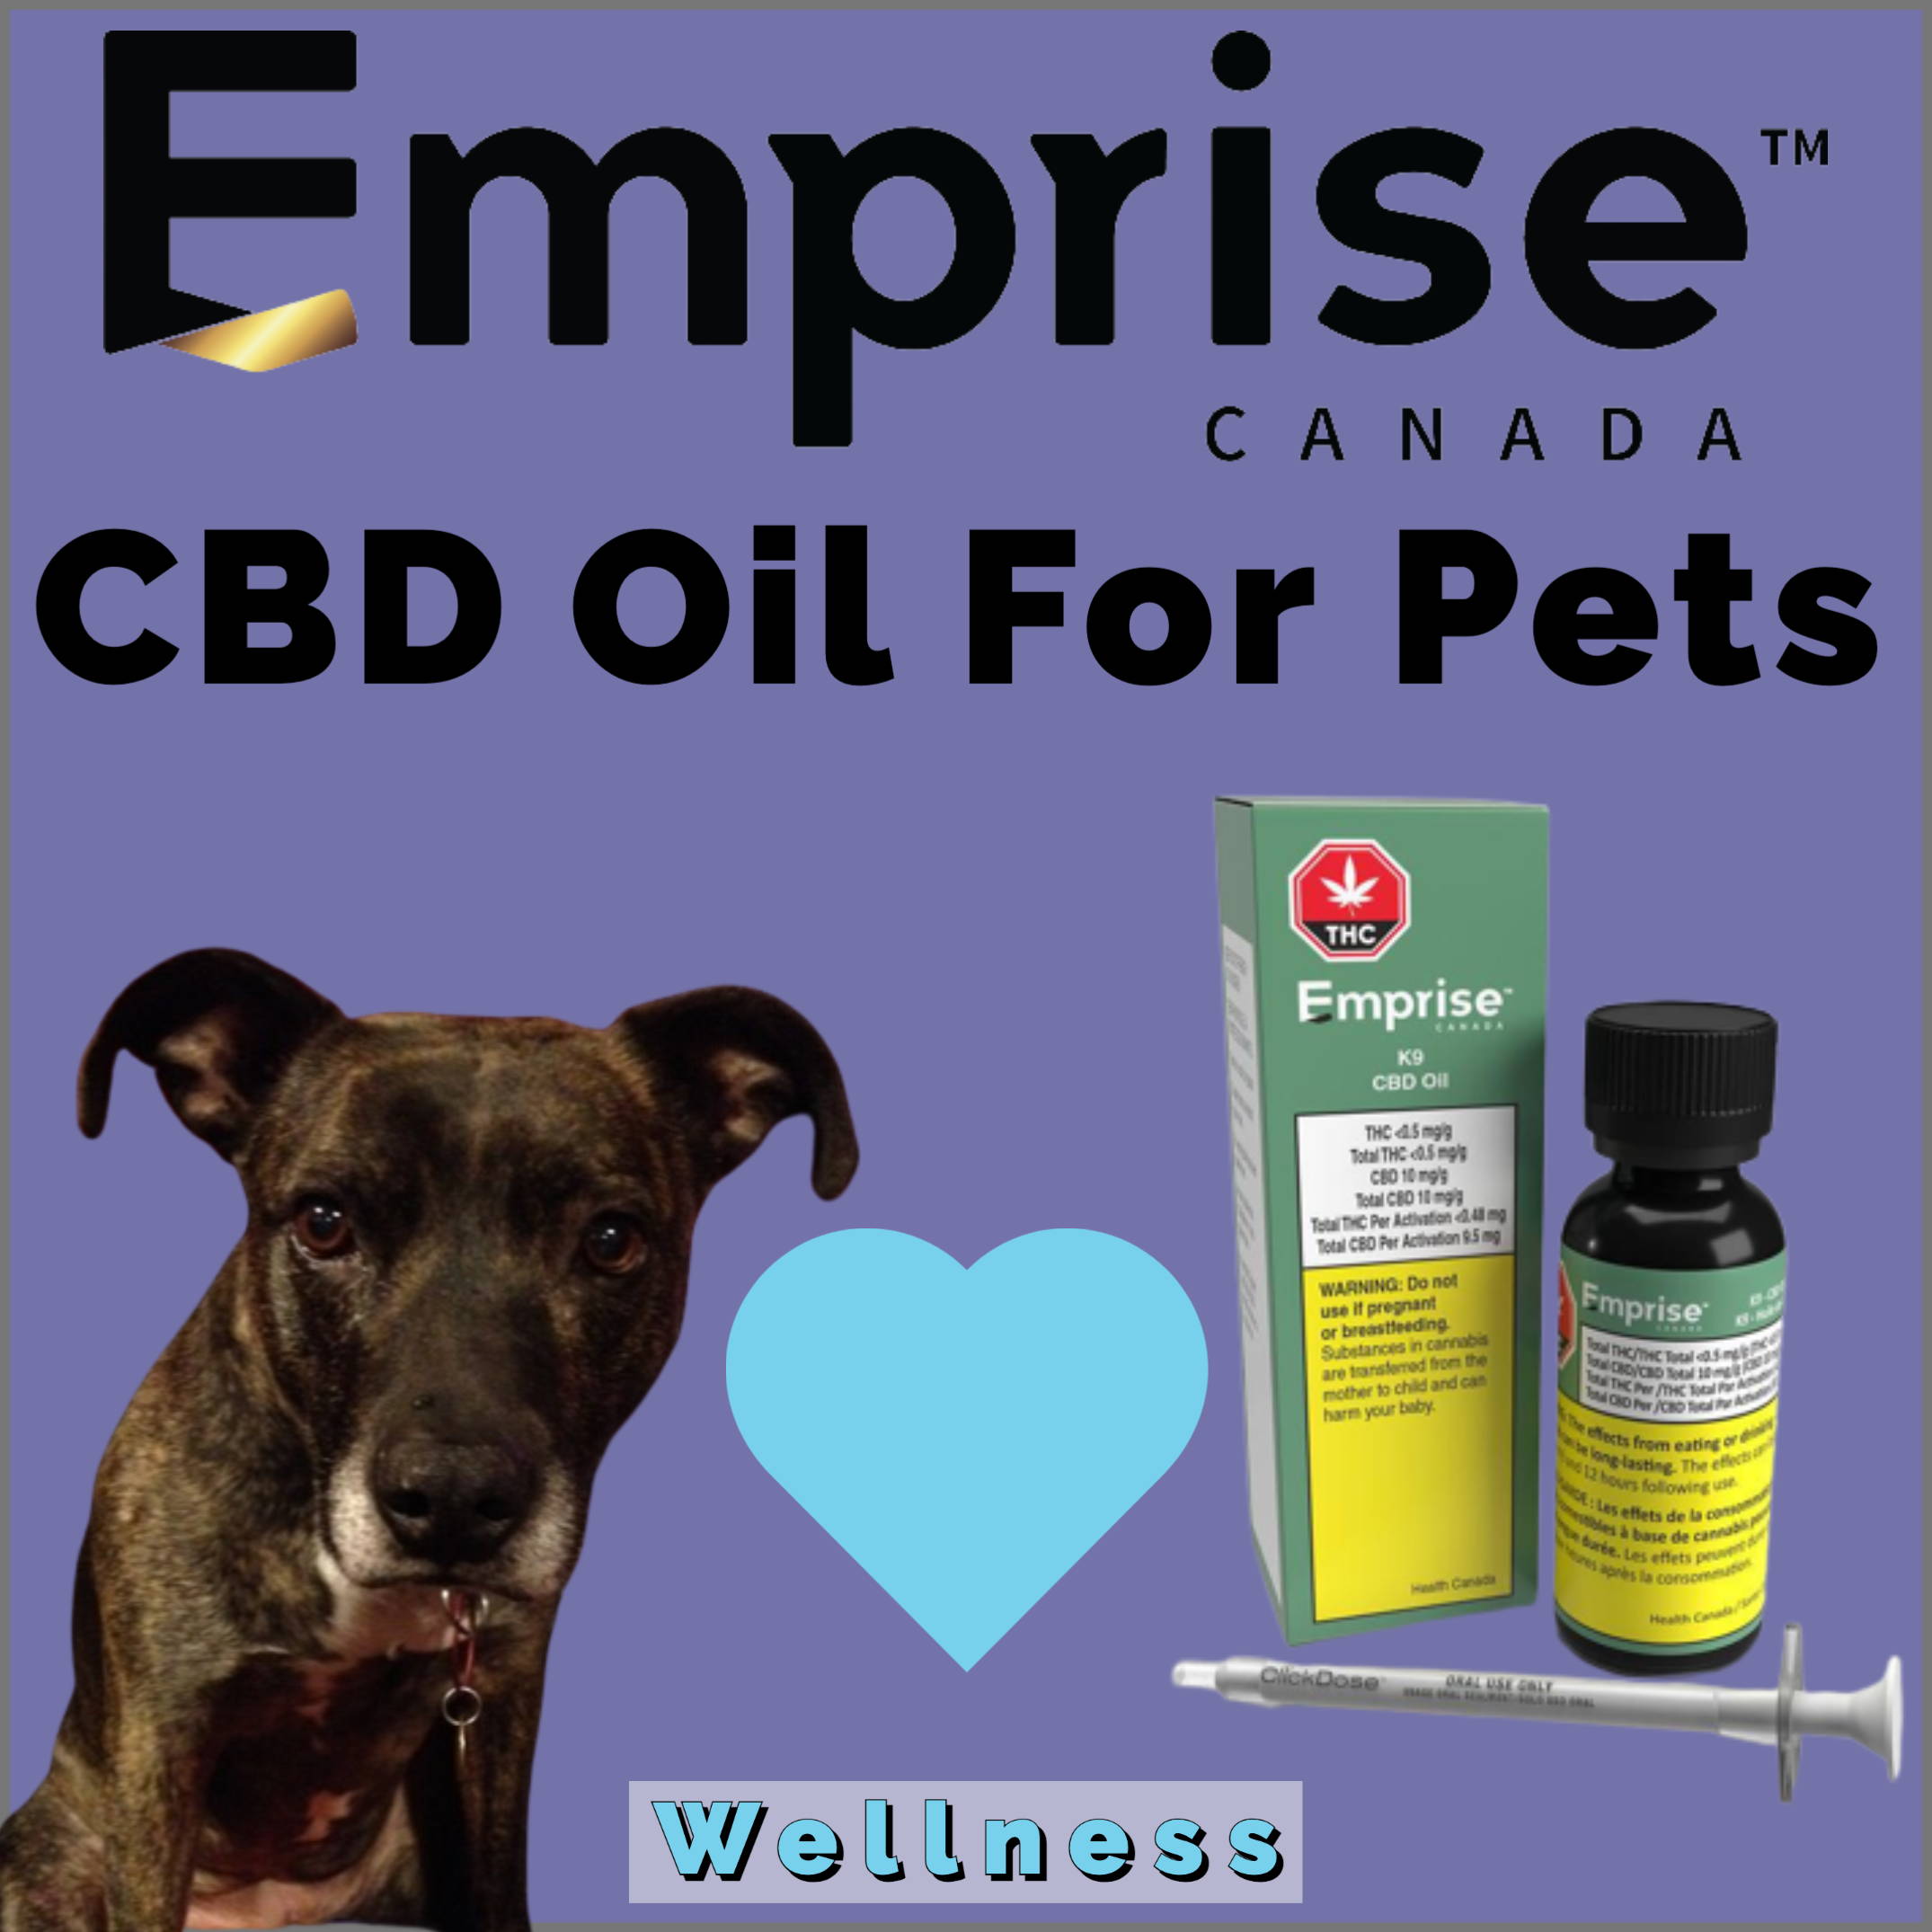 K9 CBD Oil For Dogs and Cats | Jupiter Cannabis Winnipeg